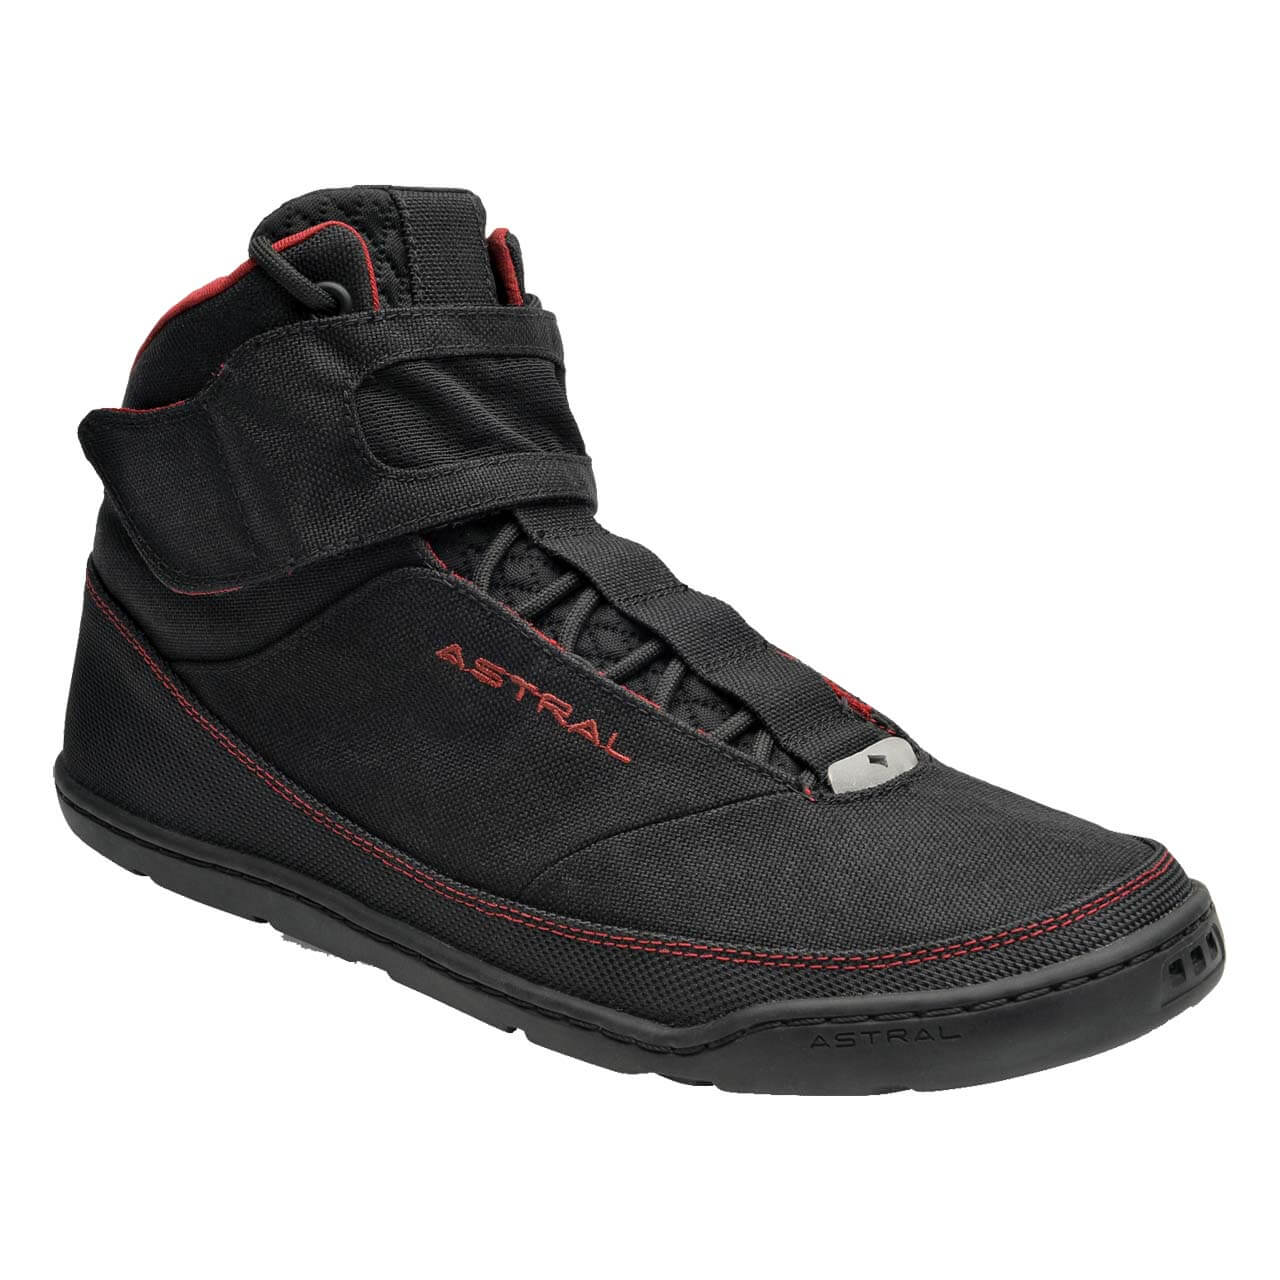 Astral Hiyak Kajak Boots - Black, US 13 / EU 48